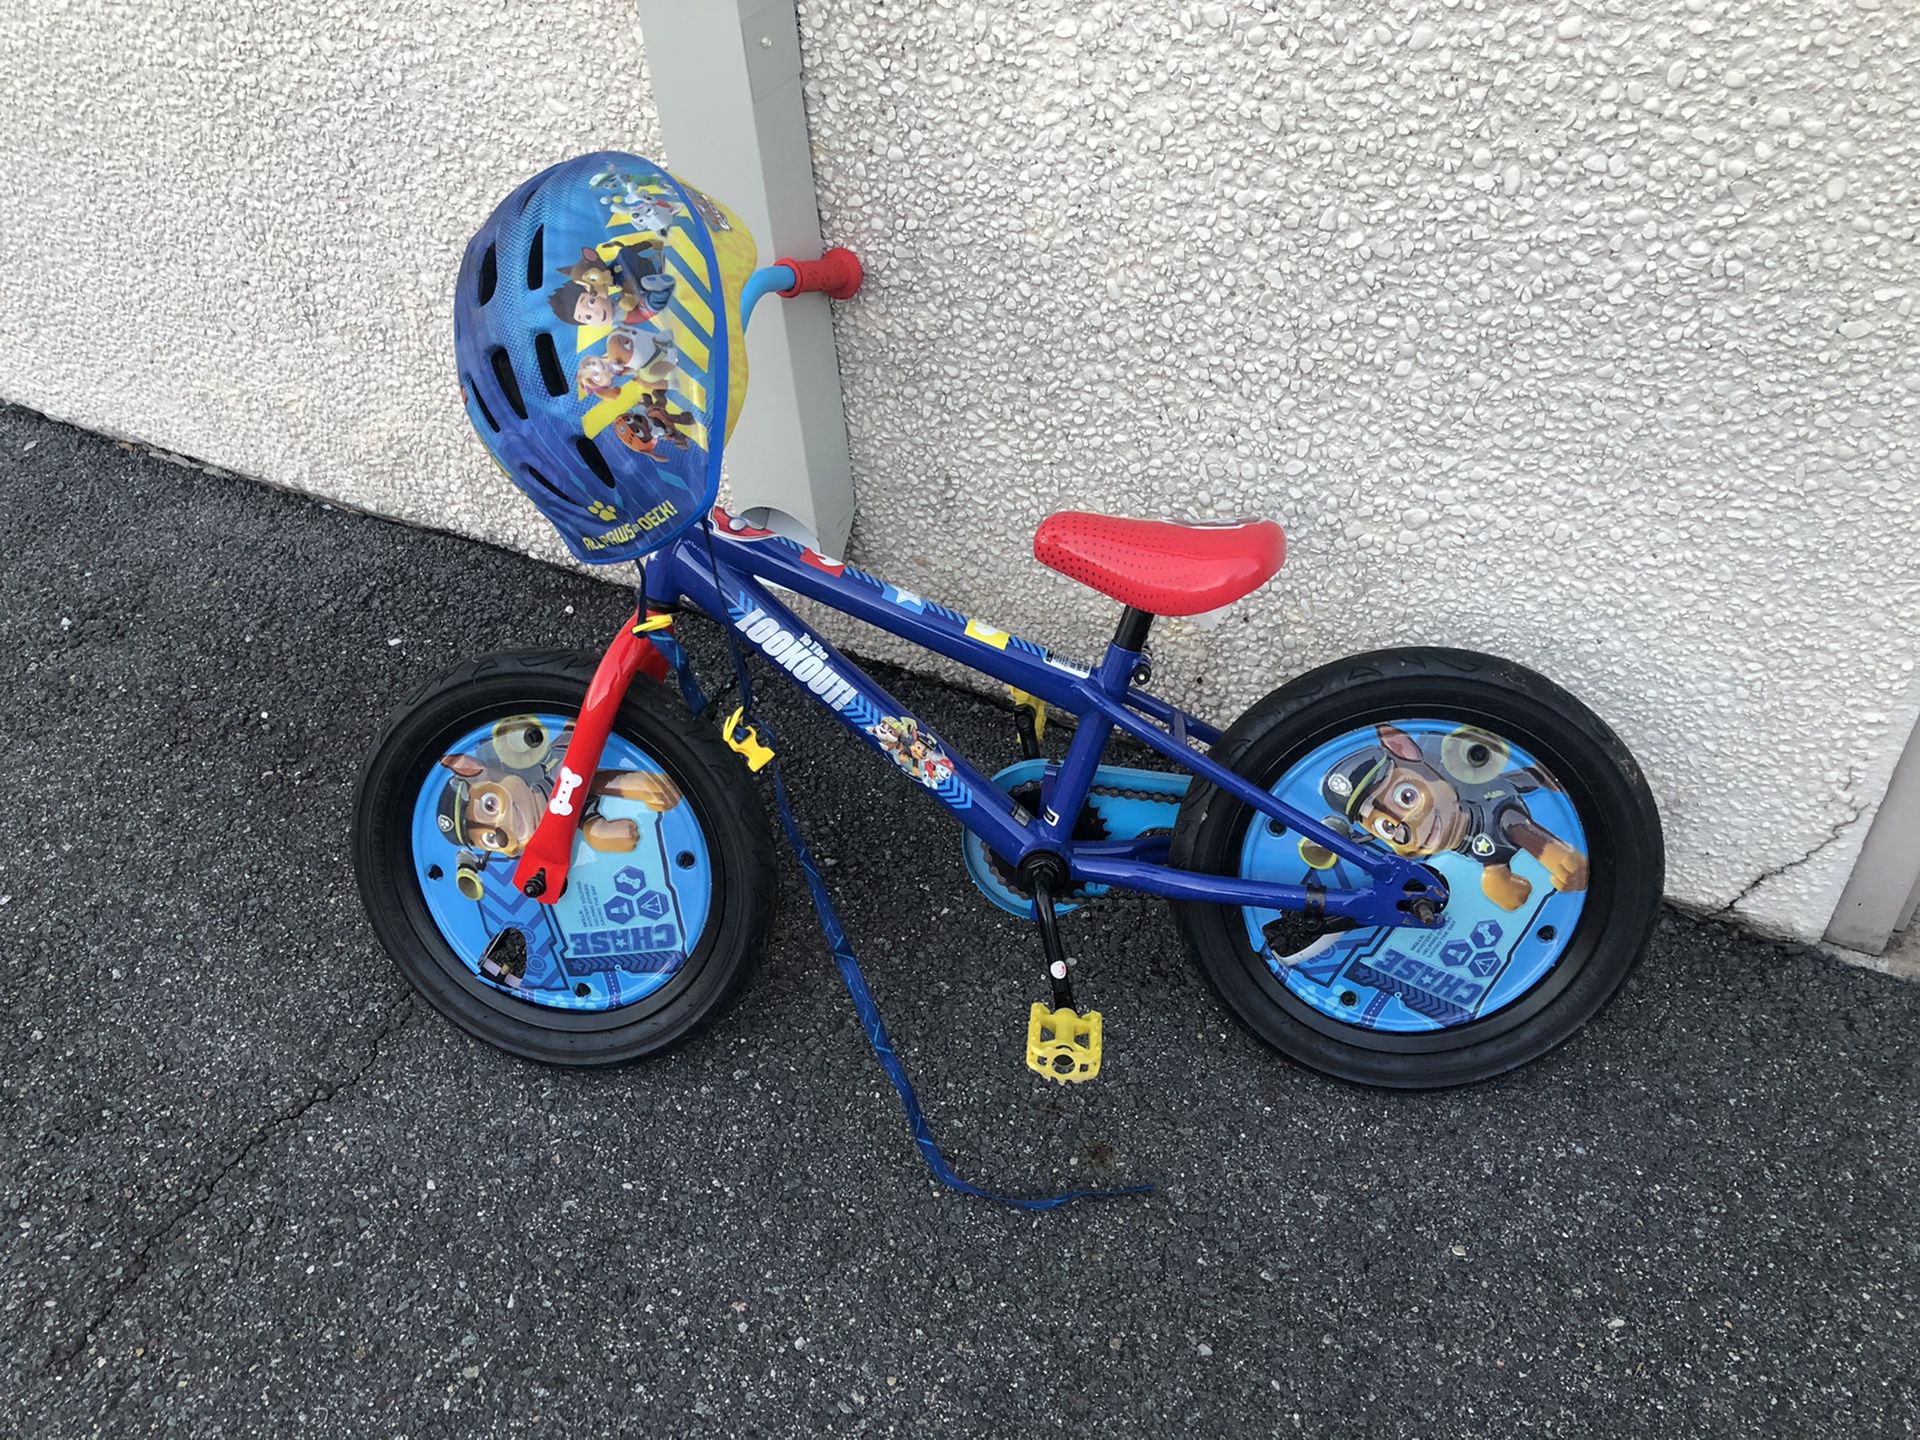 Toddler’s bike and helmet